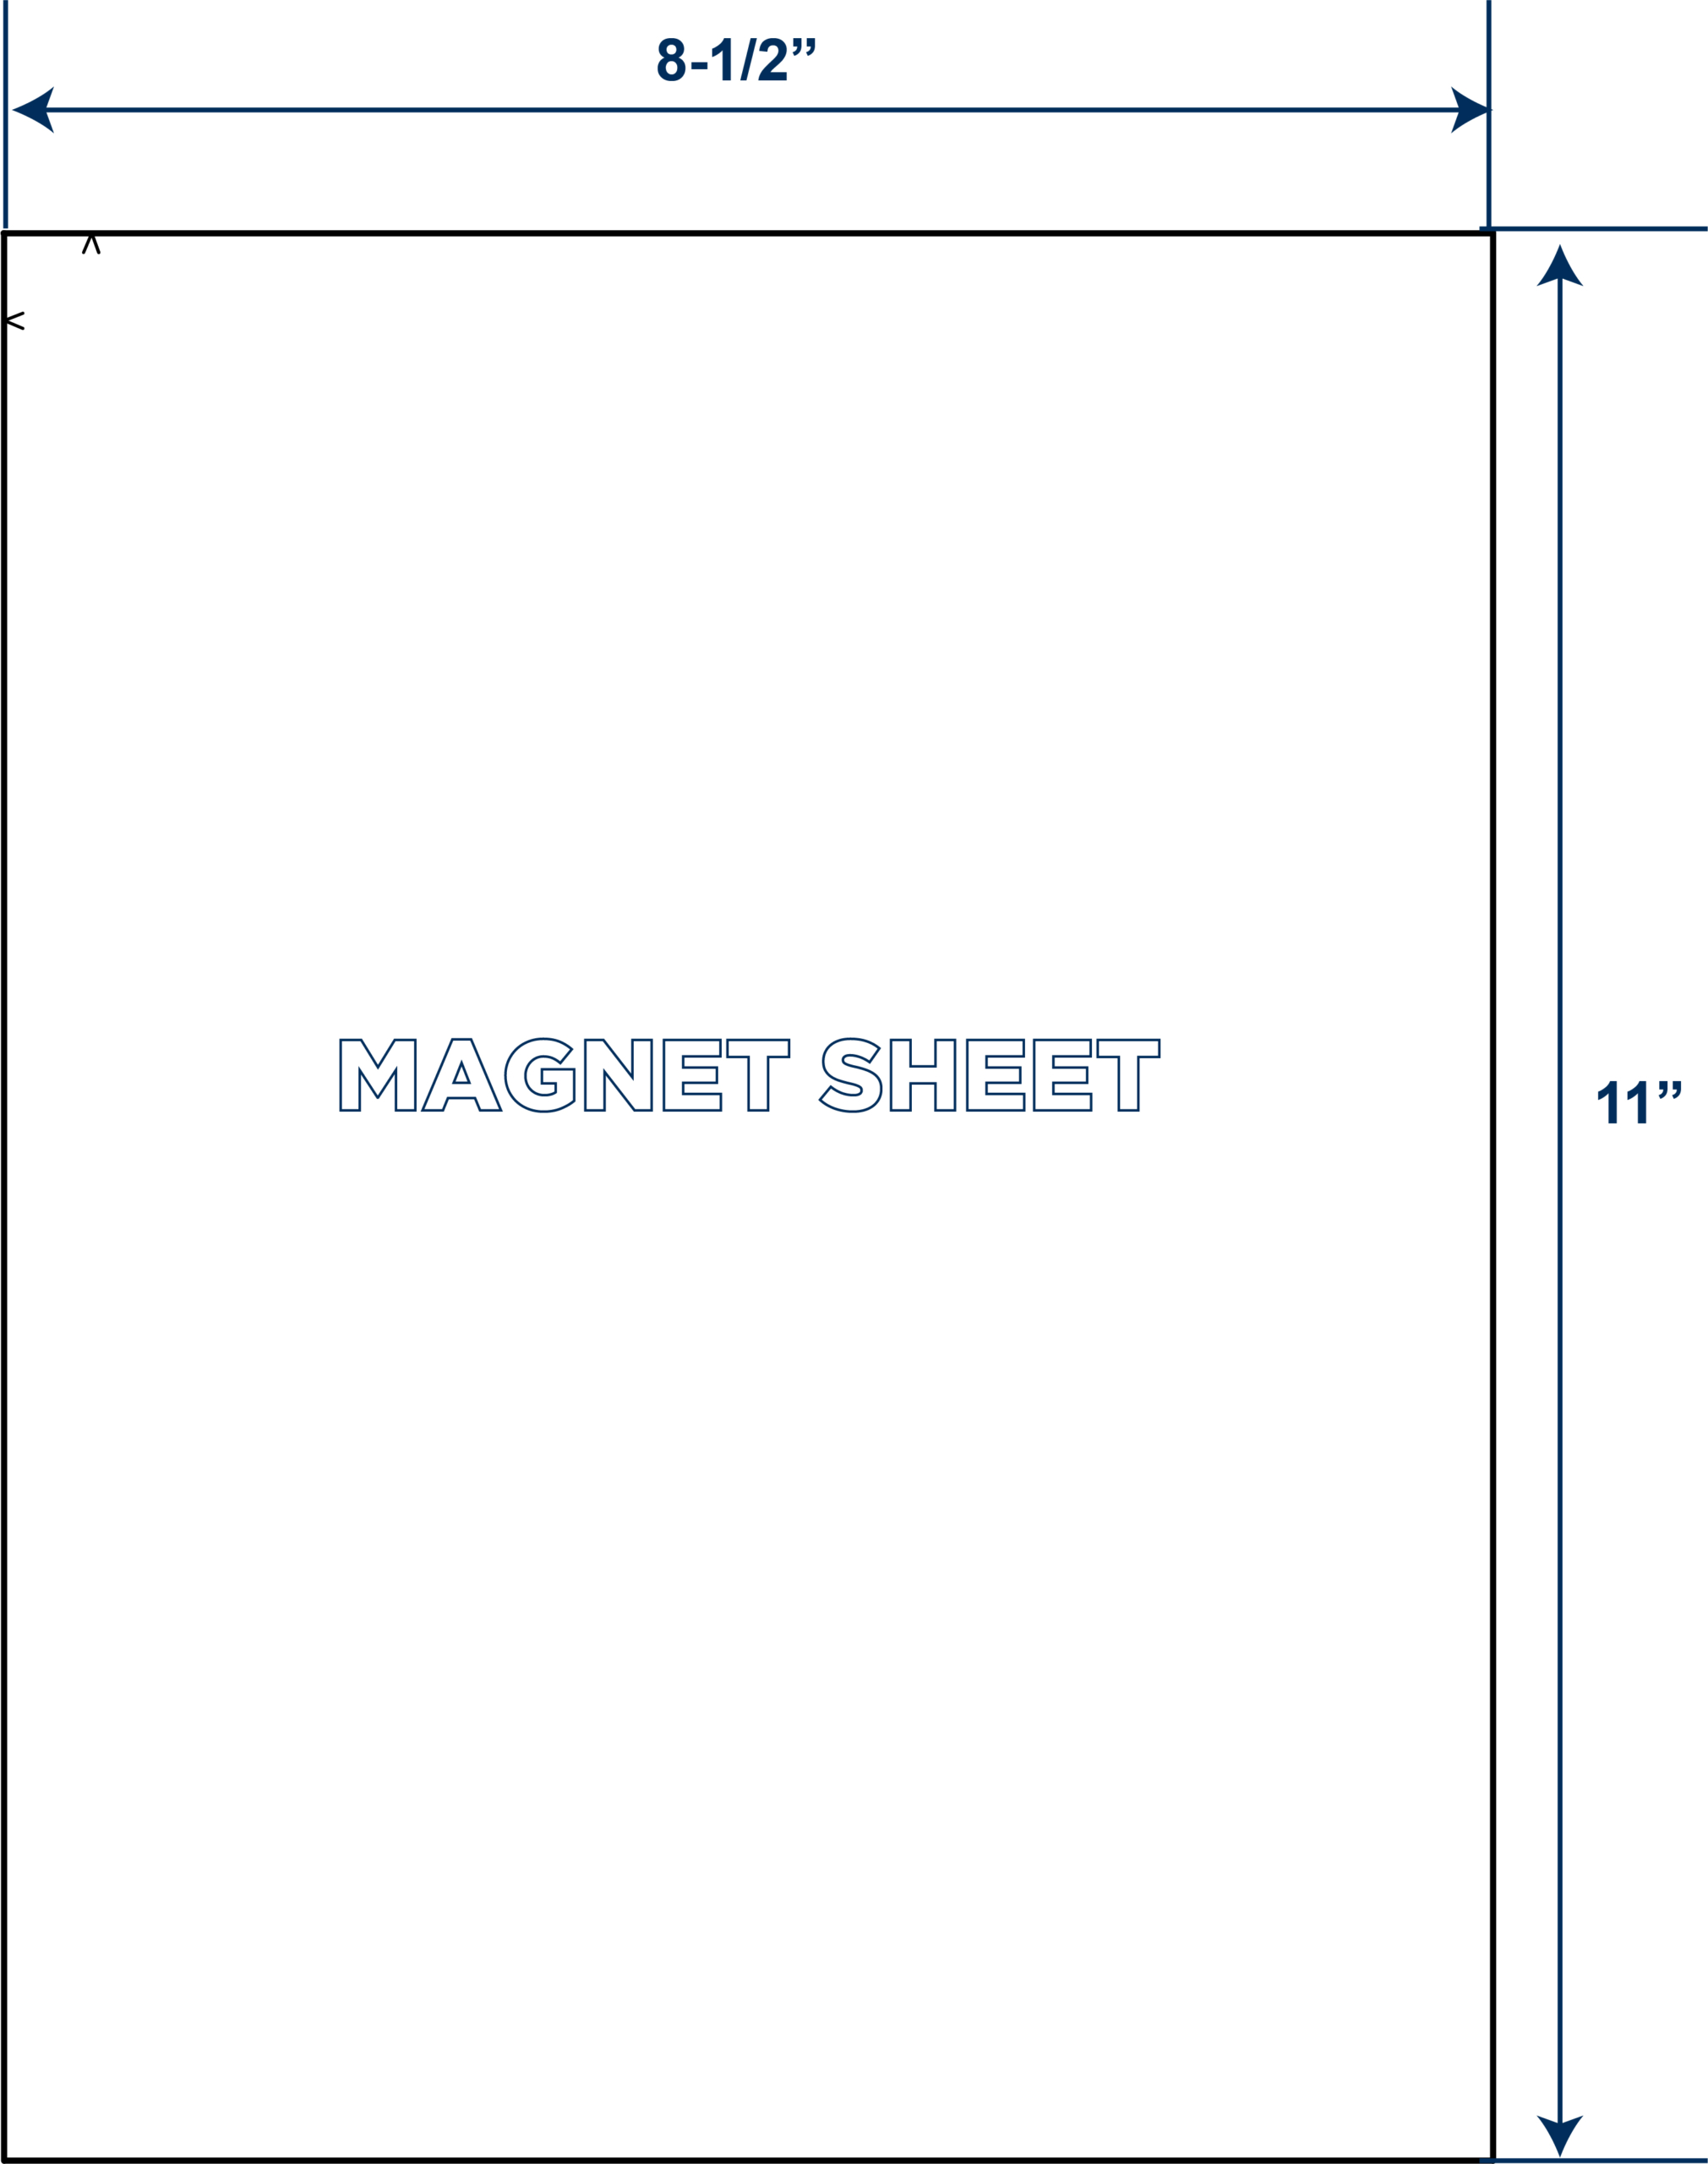 8-1/2" x 11" Magnet Sheet (Non-Adhesive)